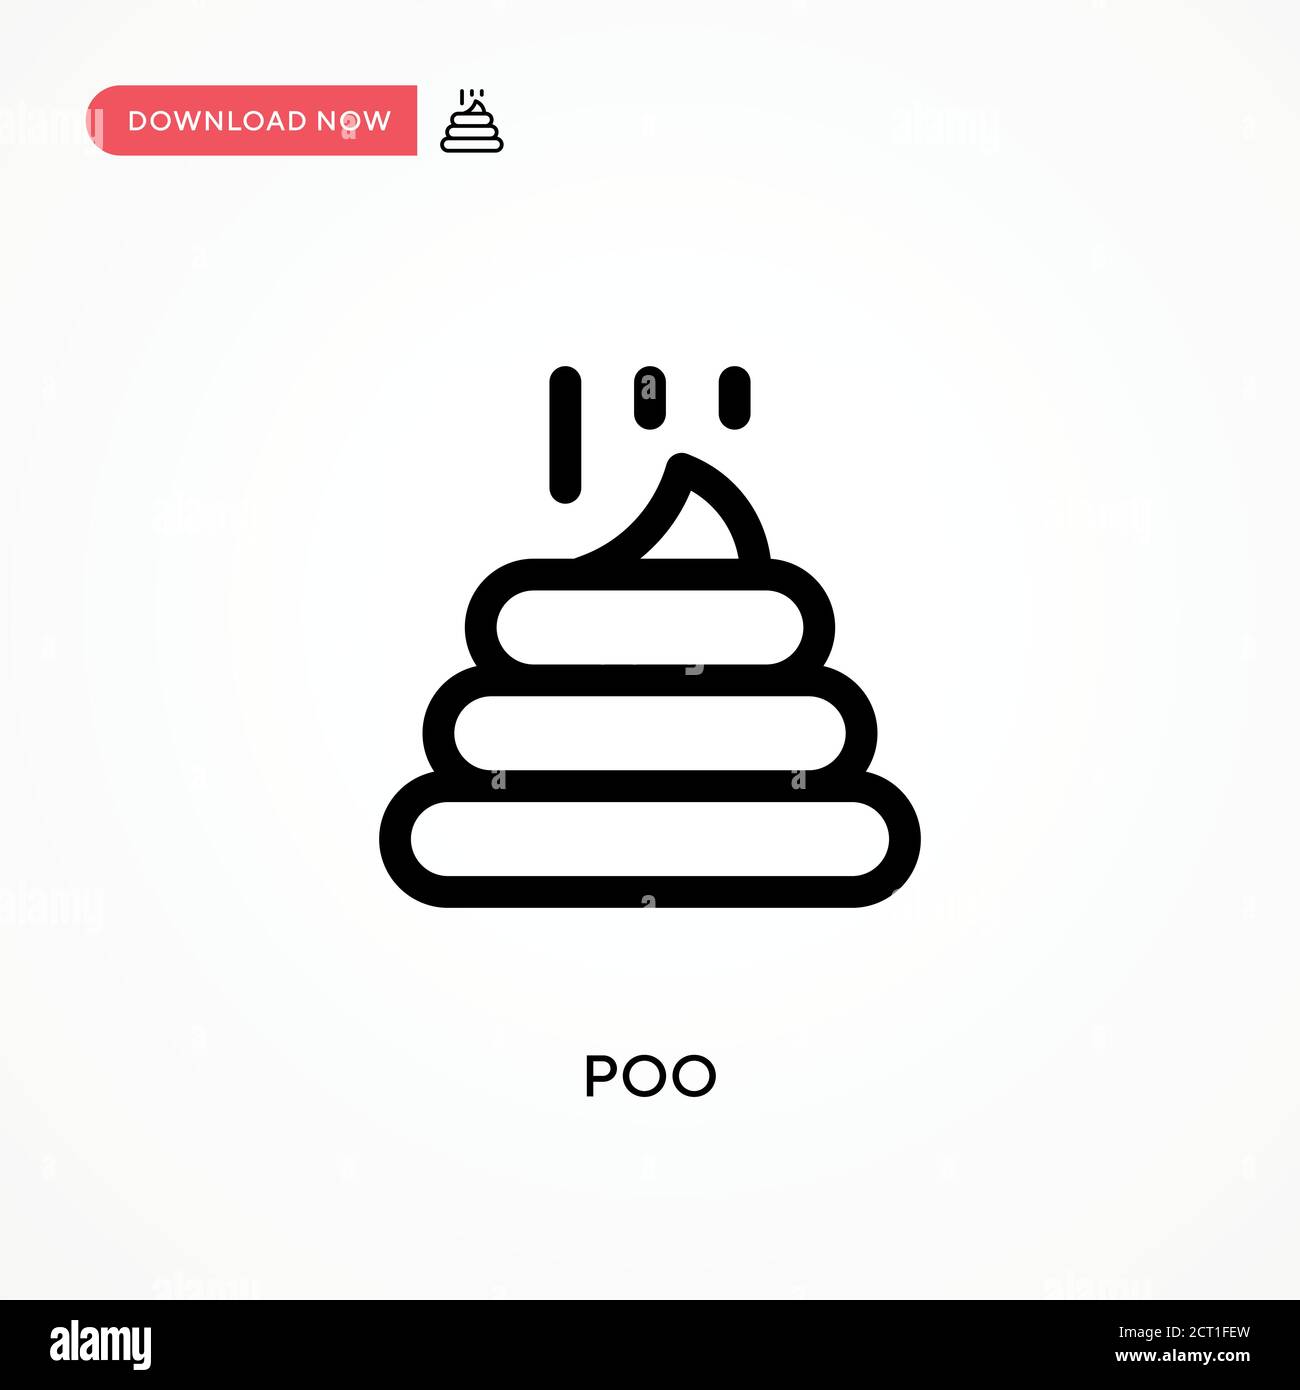 Poo Simple Vektor-Symbol. Moderne, einfache flache Vektor-Illustration für Website oder mobile App Stock Vektor